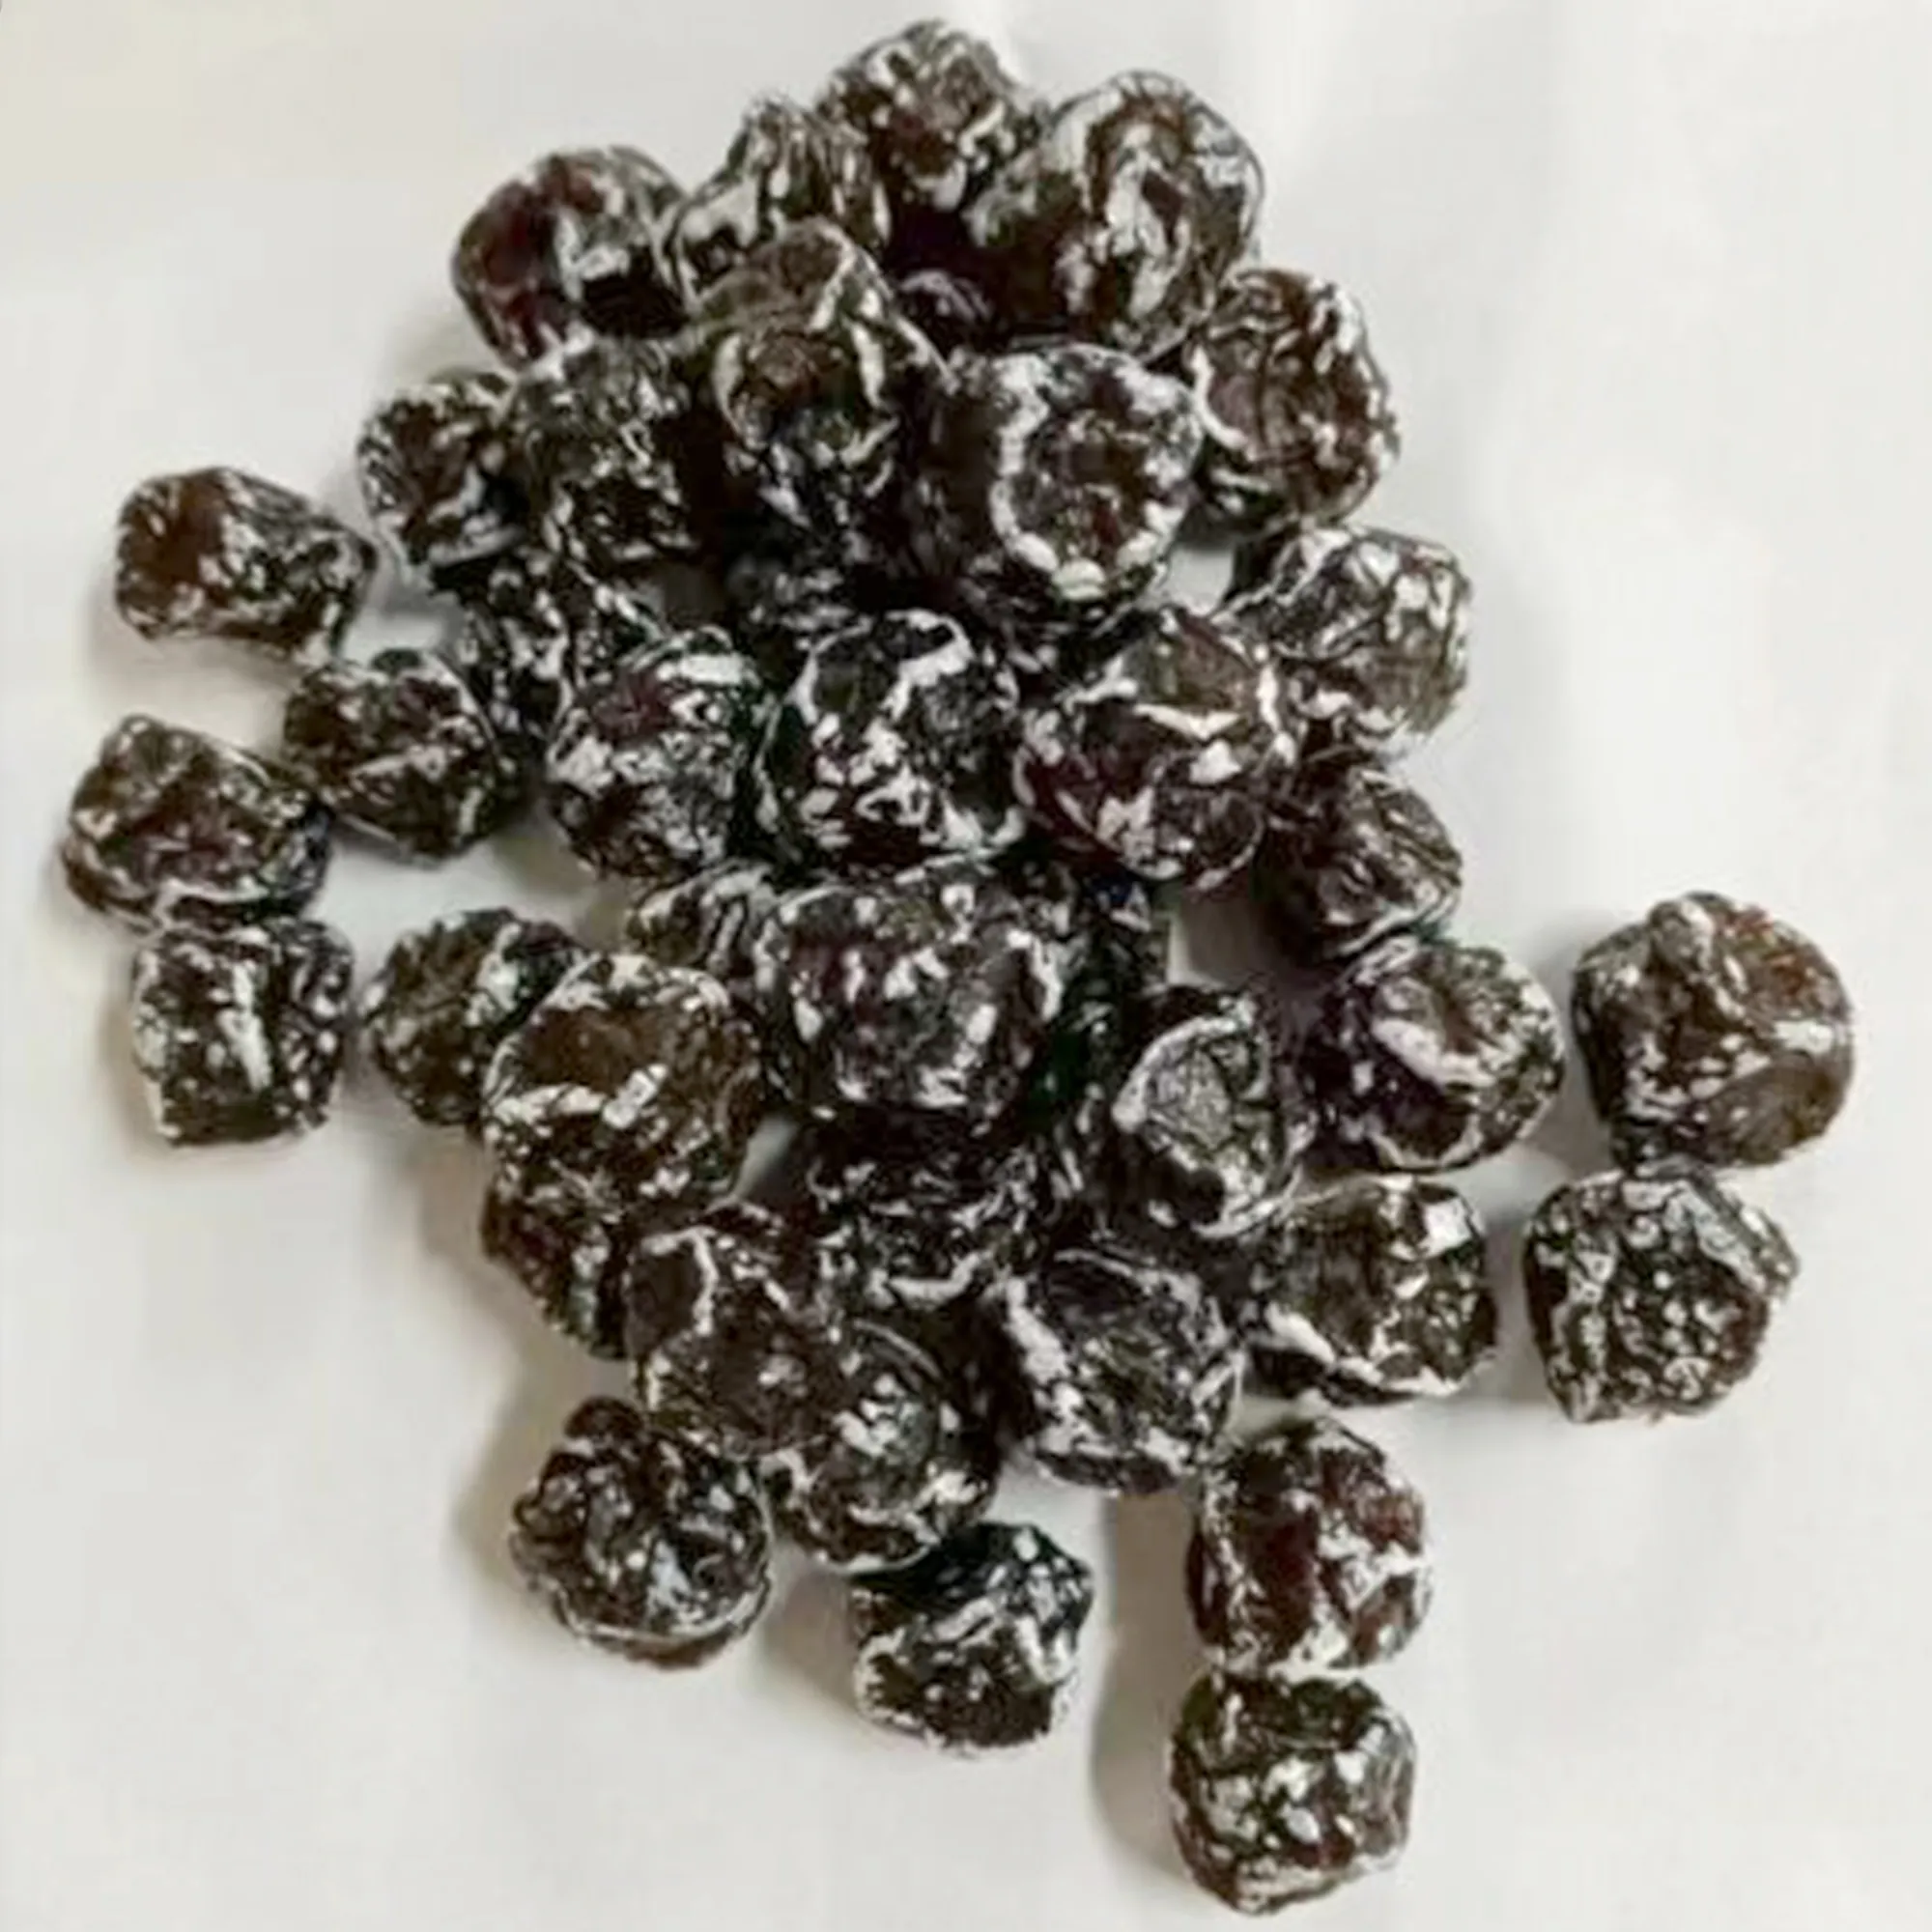 Low Price Healthy Prunes Big Black Dried Plum Fruit Organic Health Benefits Plum